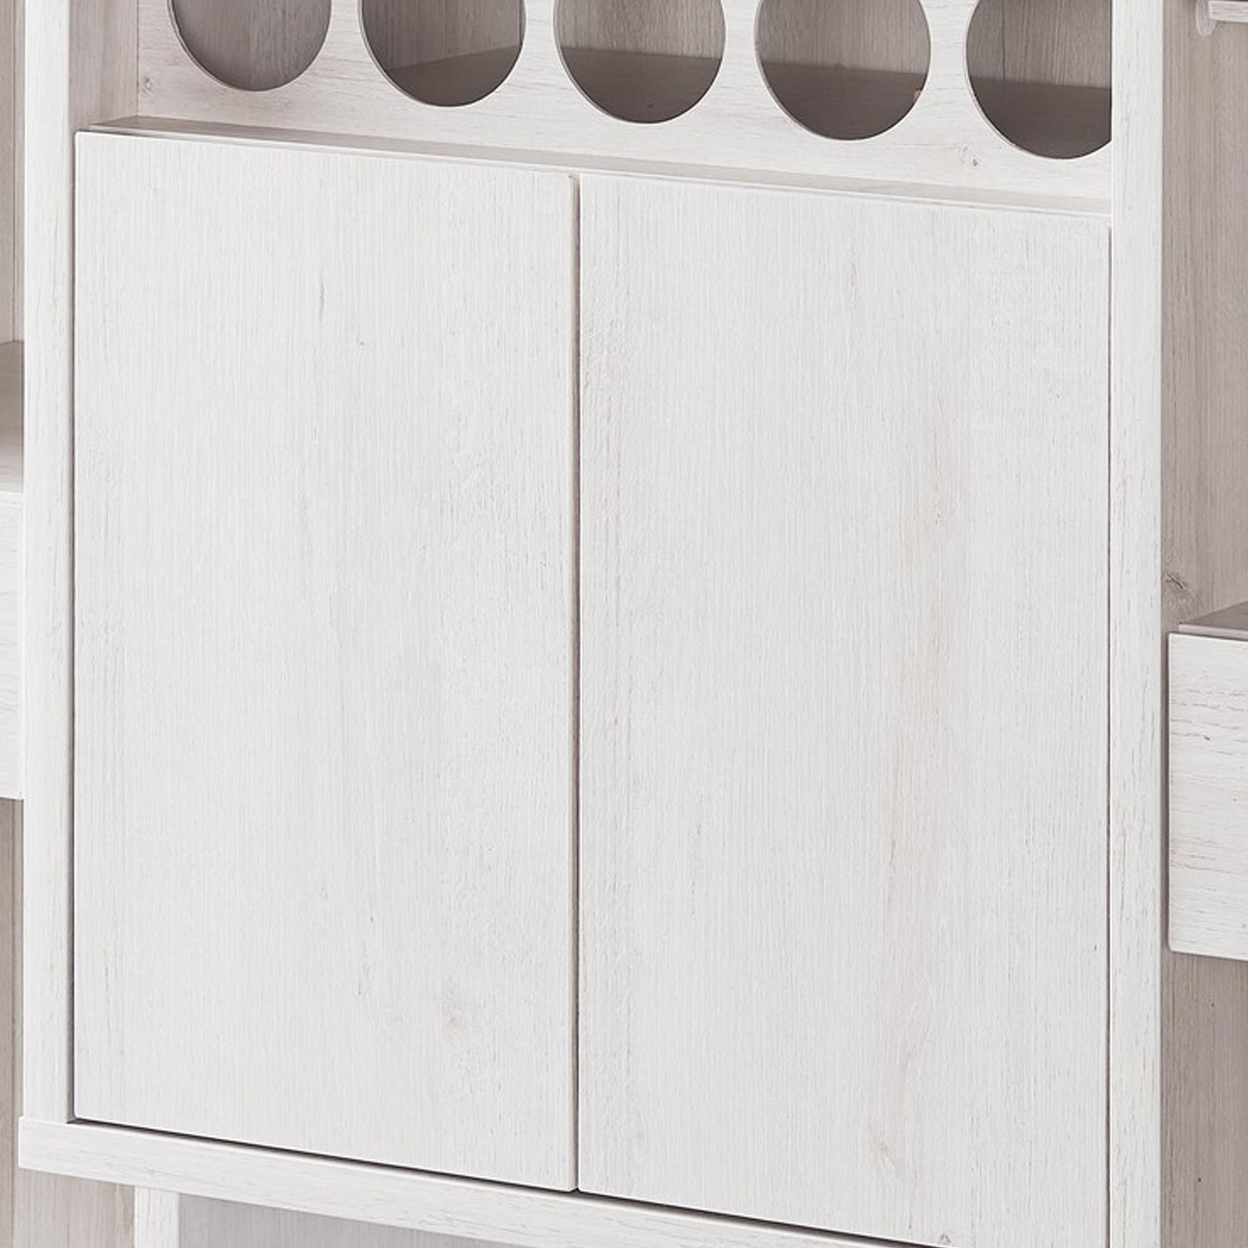 2 Door Wooden Buffet With 4 Open Compartments, White- Saltoro Sherpi